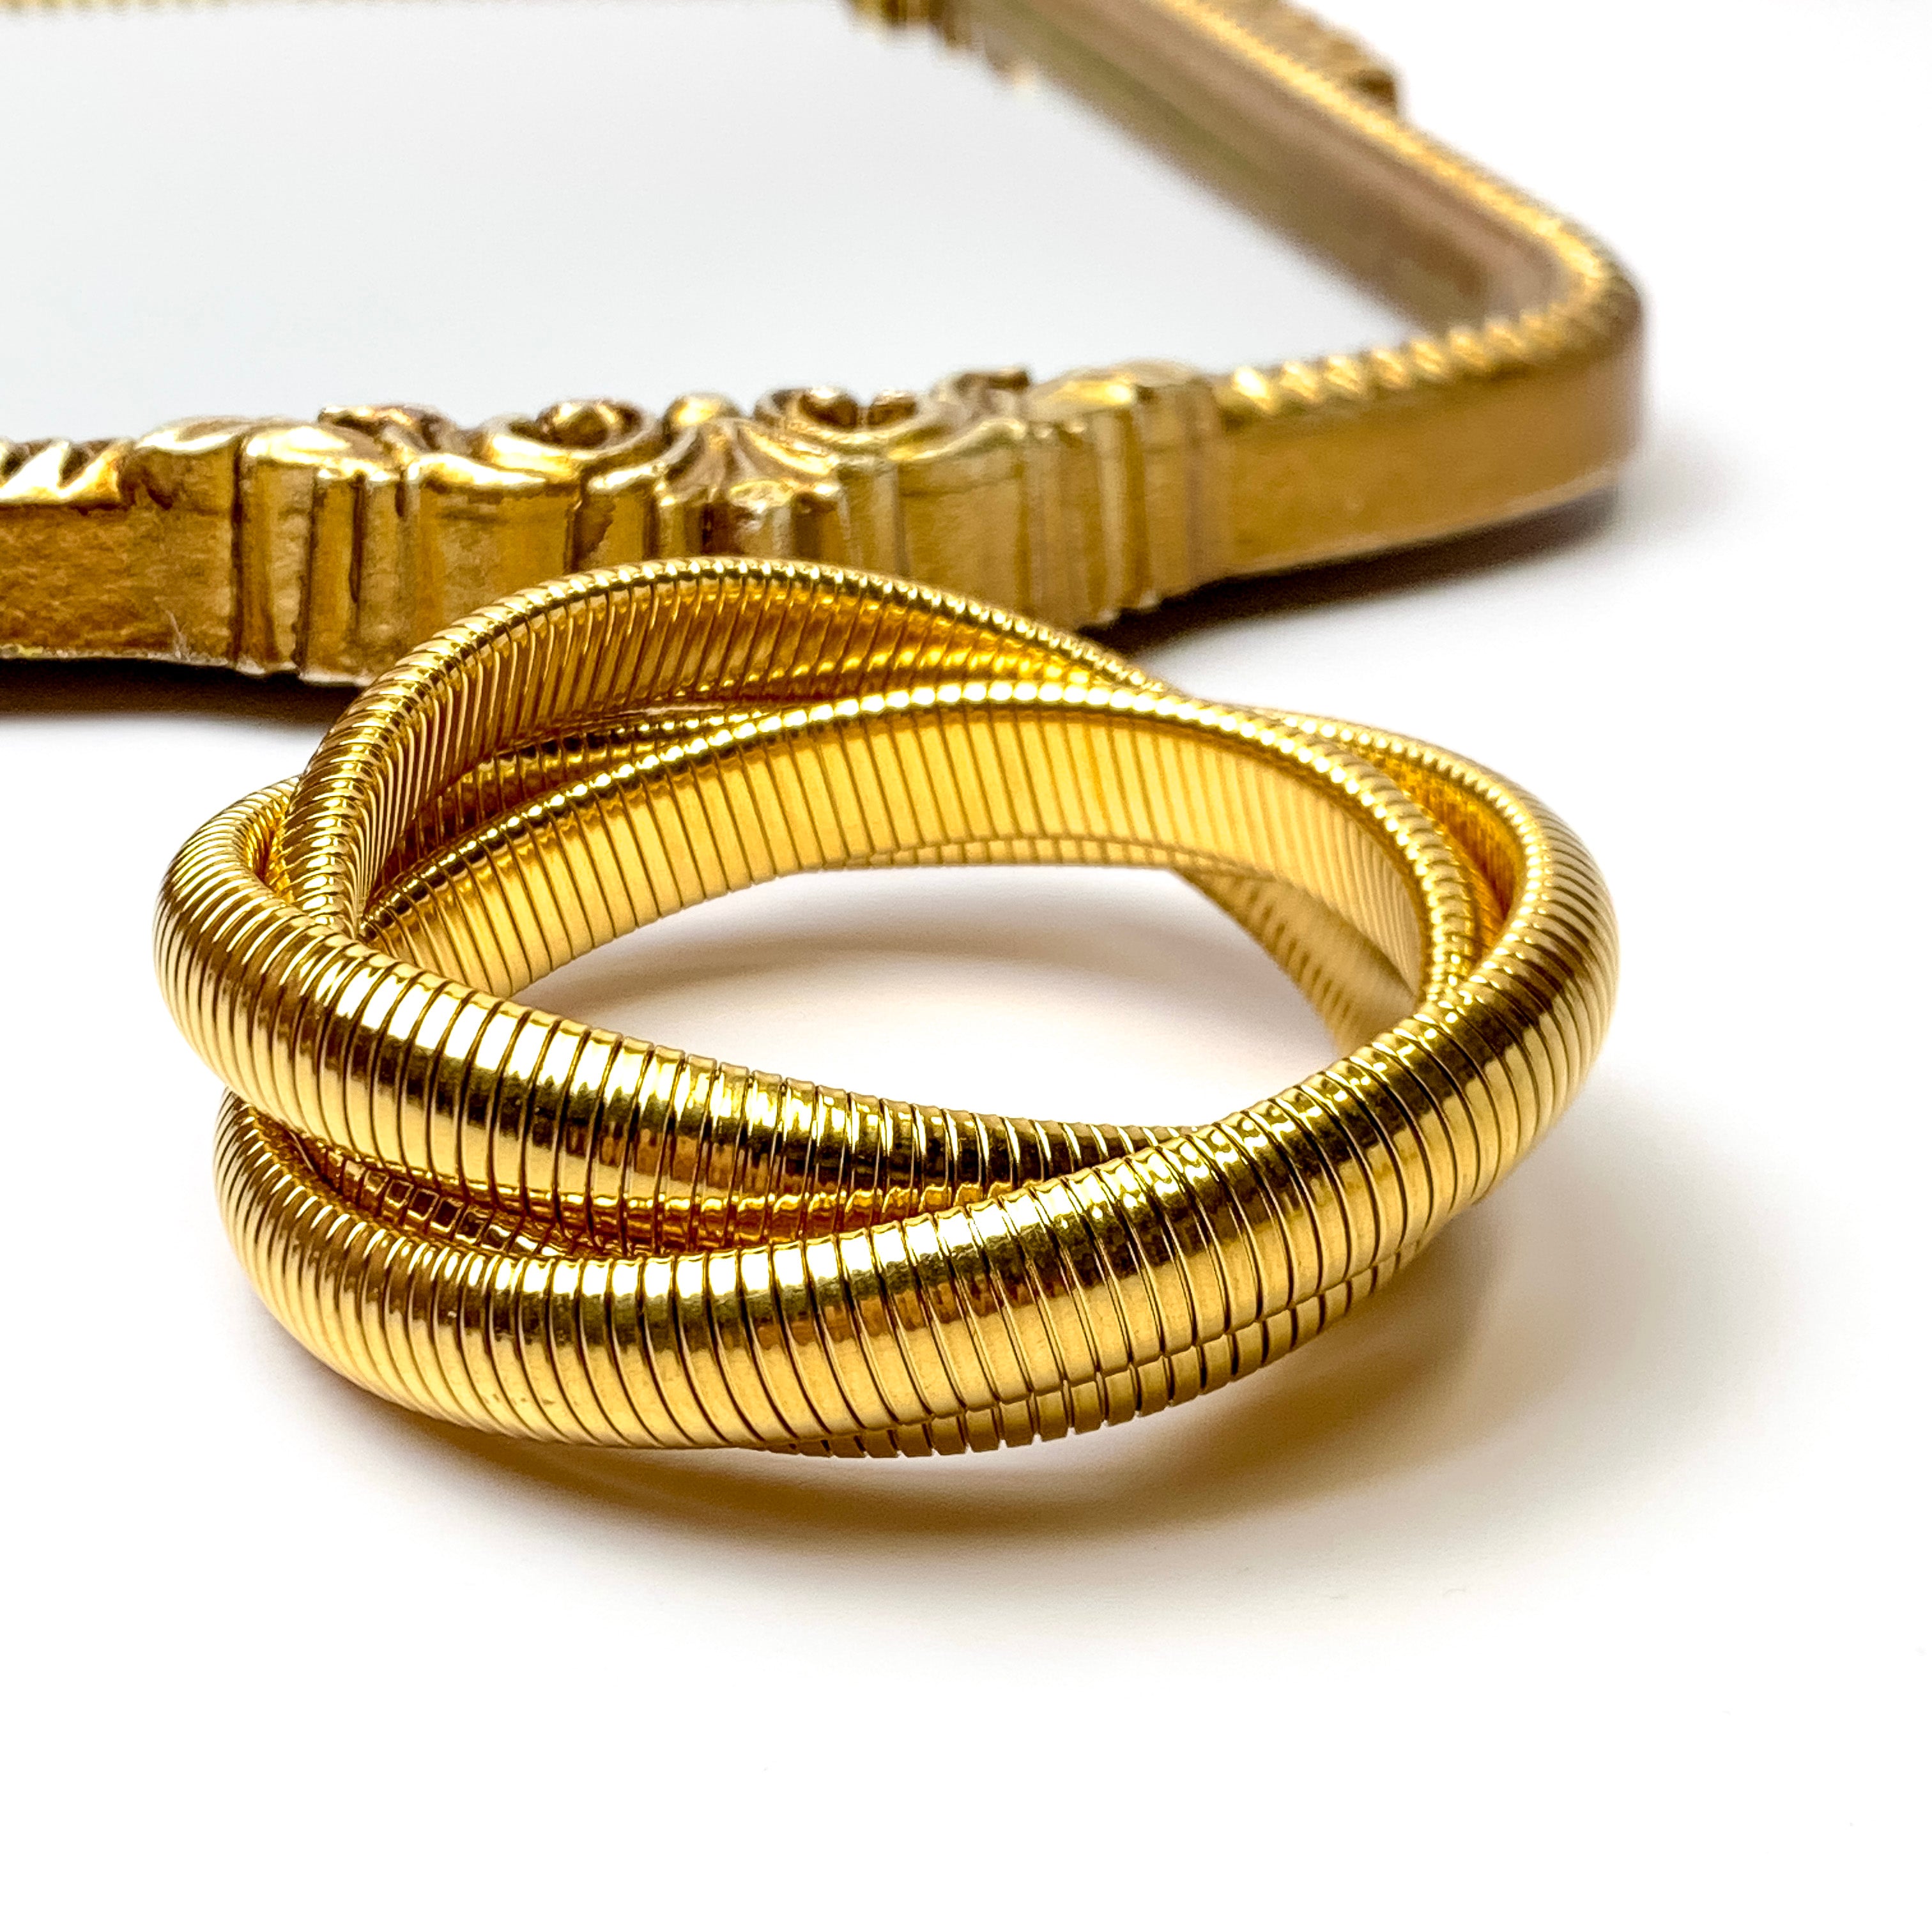 Bracha | She's Bossy Chunky Bangle Bracelet in Gold Tone - Giddy Up Glamour Boutique